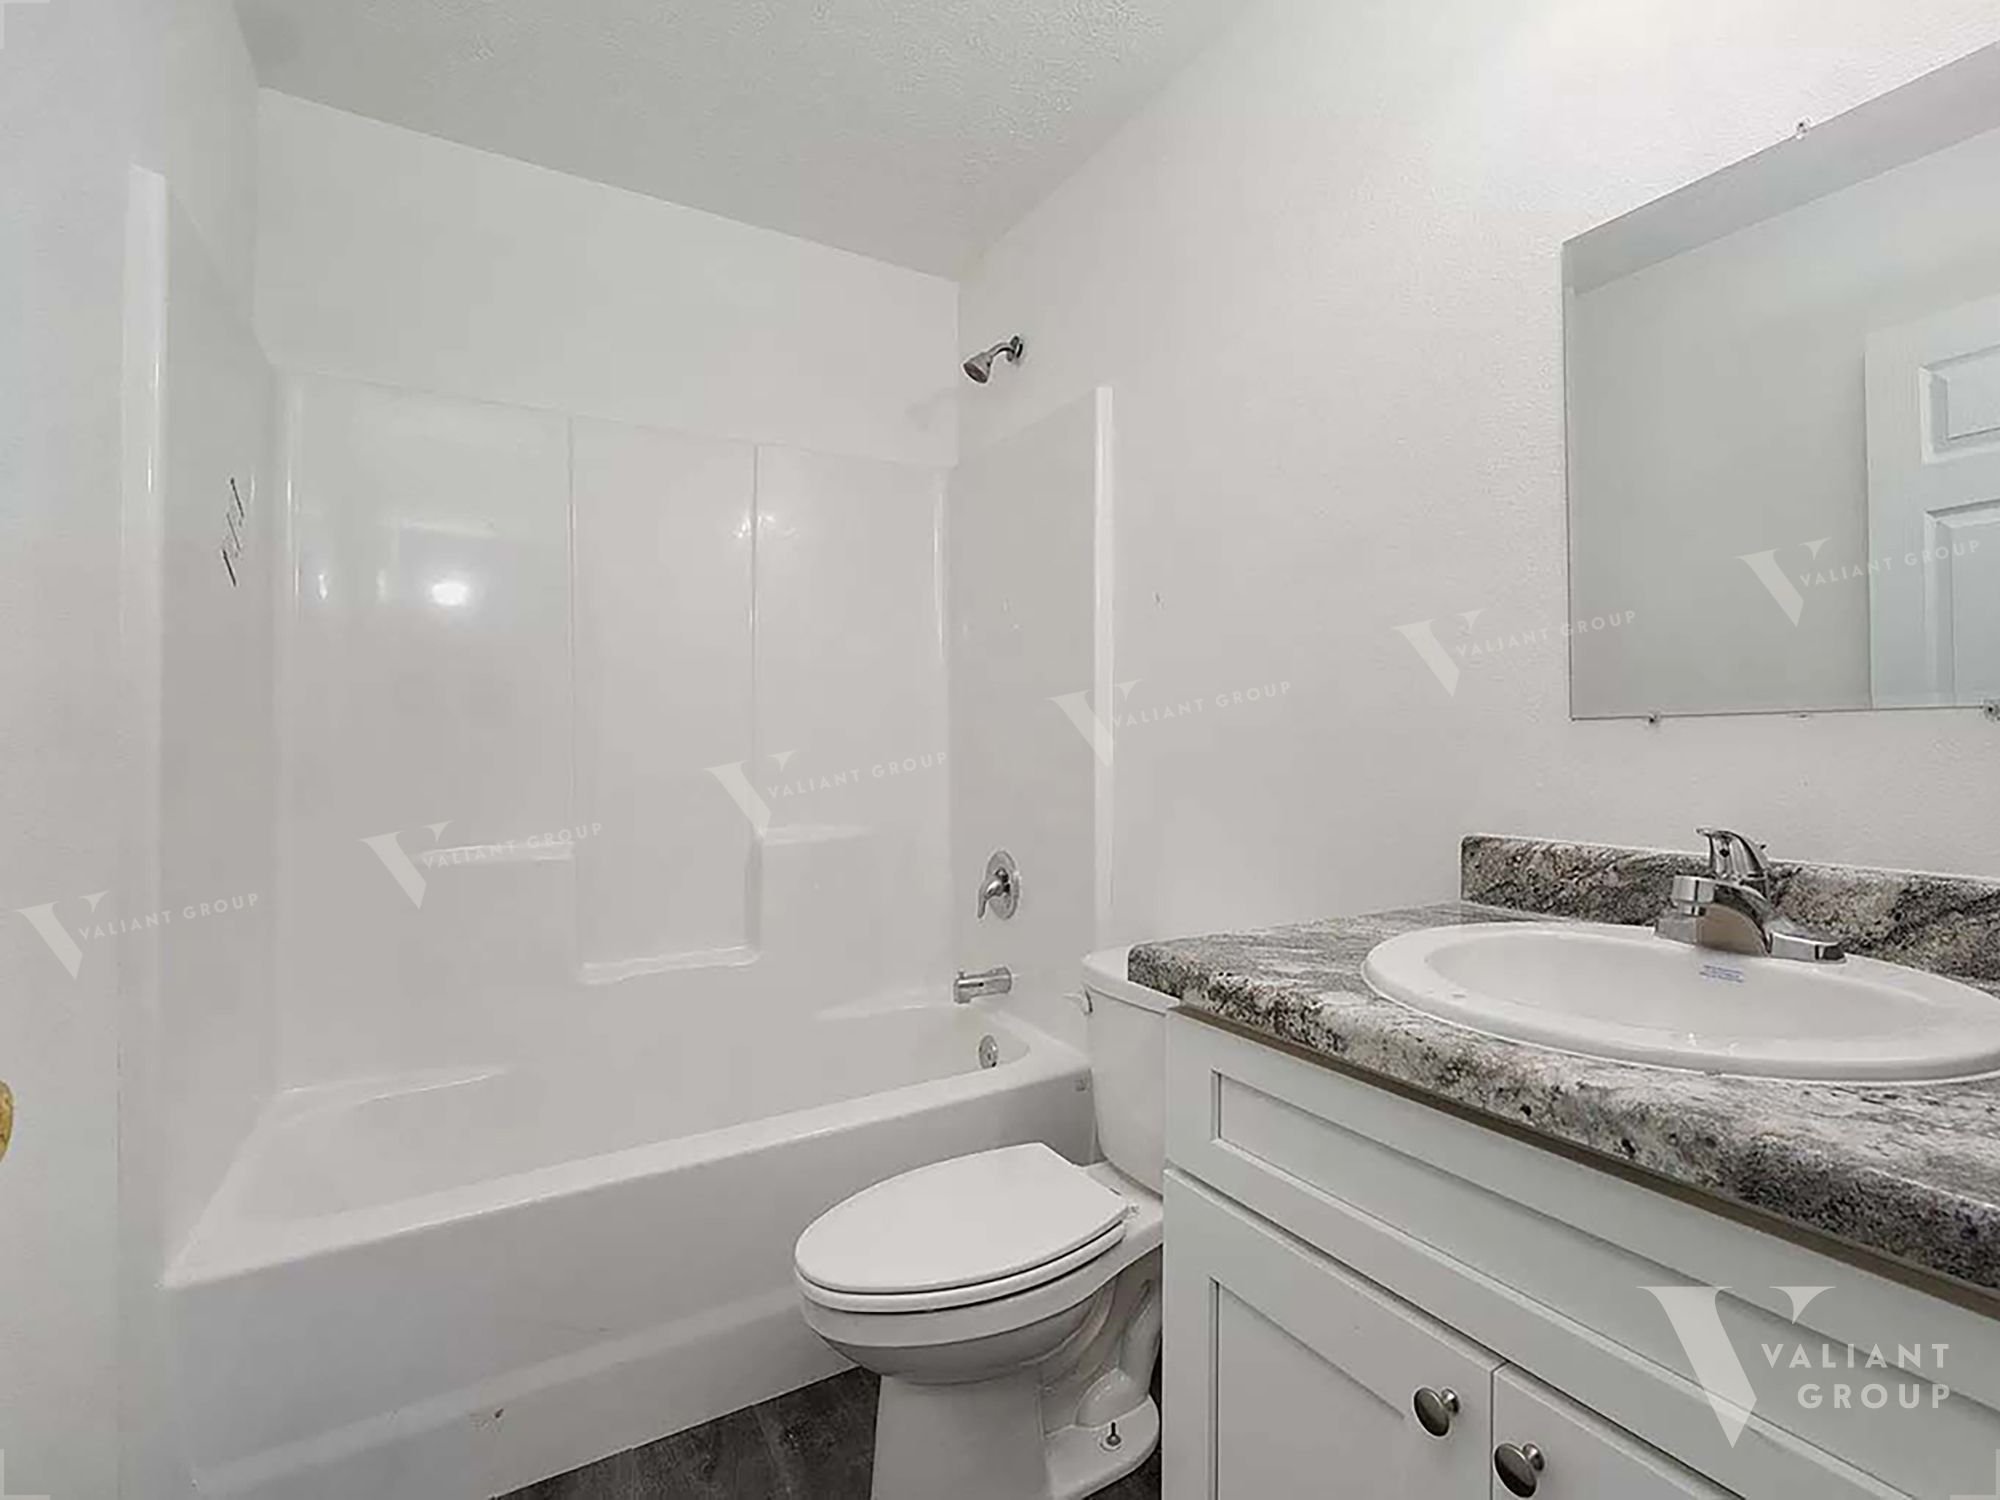 Rental Duplex Springfield MO 1610 W Scott Unit B - primary bathroom.jpg